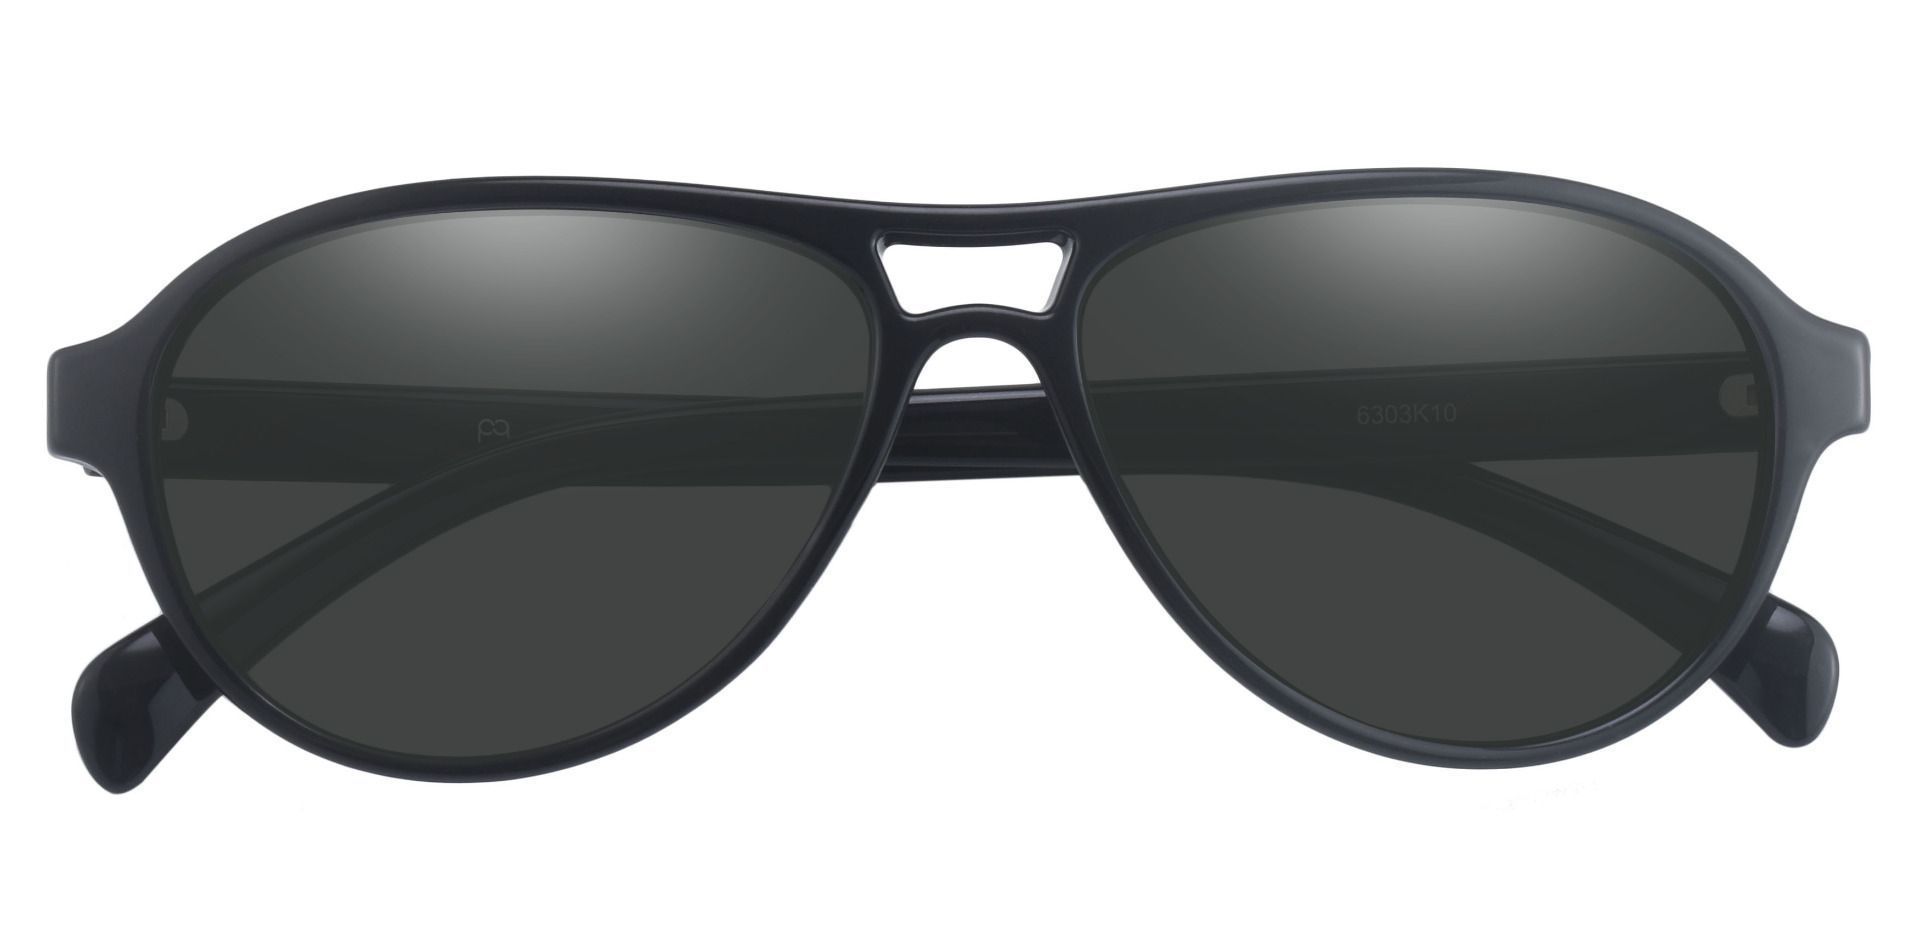 Sosa Aviator Prescription Sunglasses - Black Frame With Gray Lenses ...